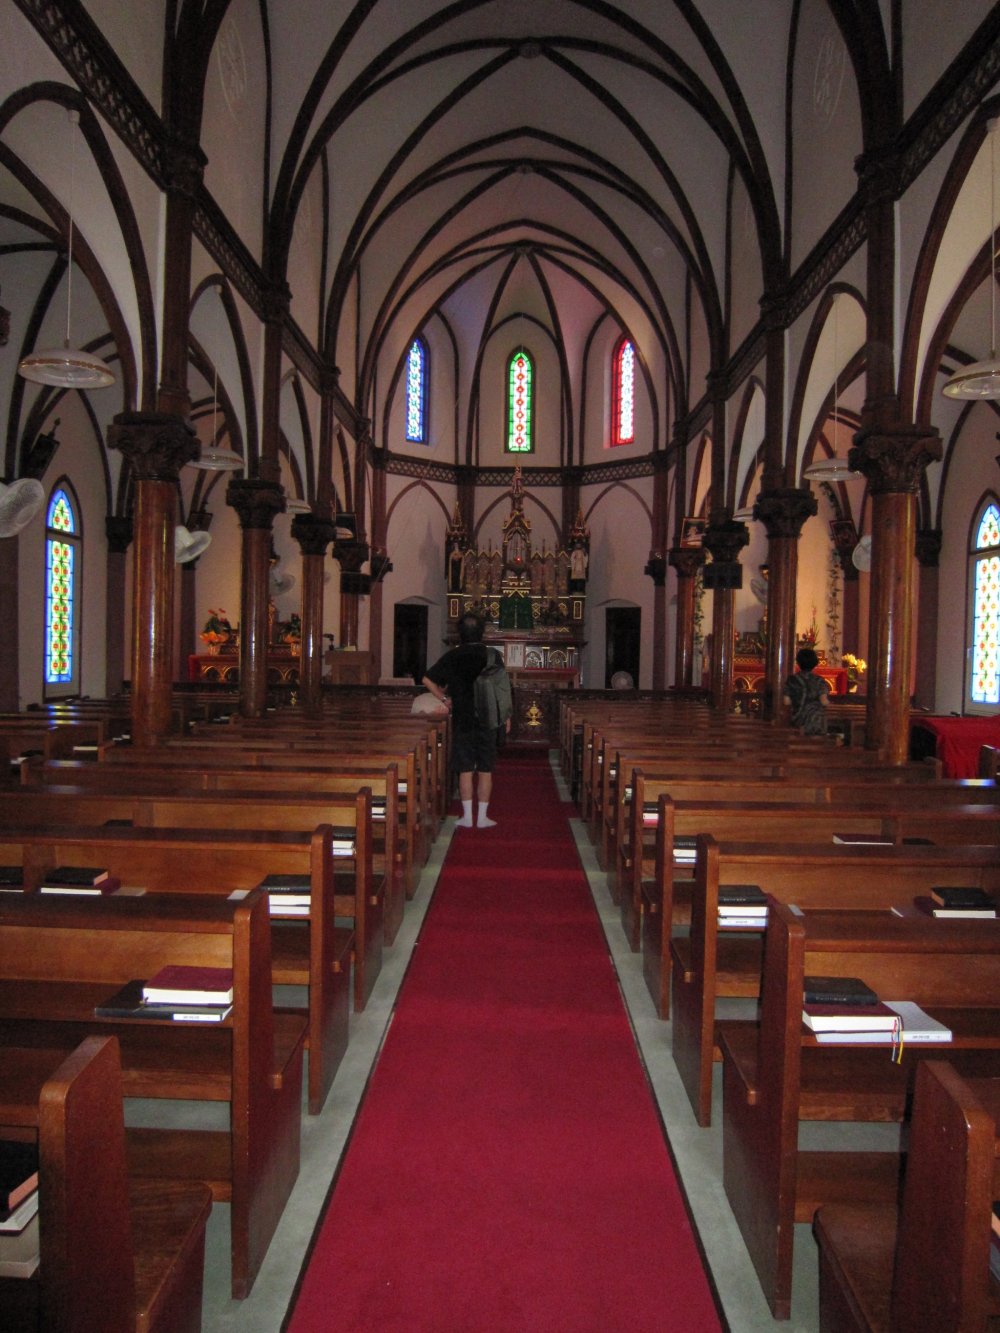 Inside Aosagaura Church, seen from the entrance